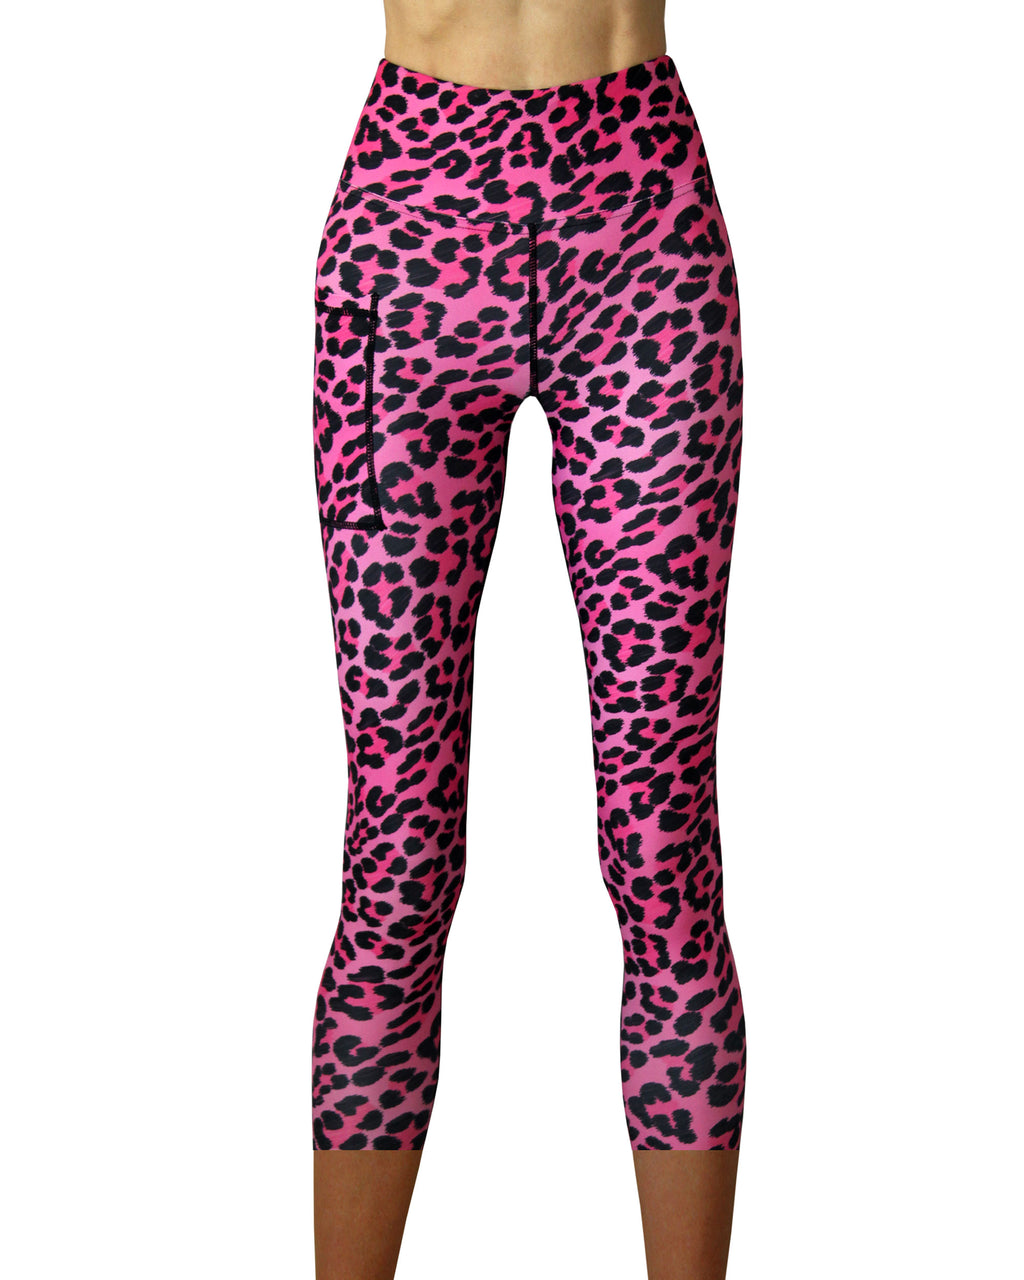 Leopard print three quarter cropped capri leggings, made by Vivolicious in Cape Town.  